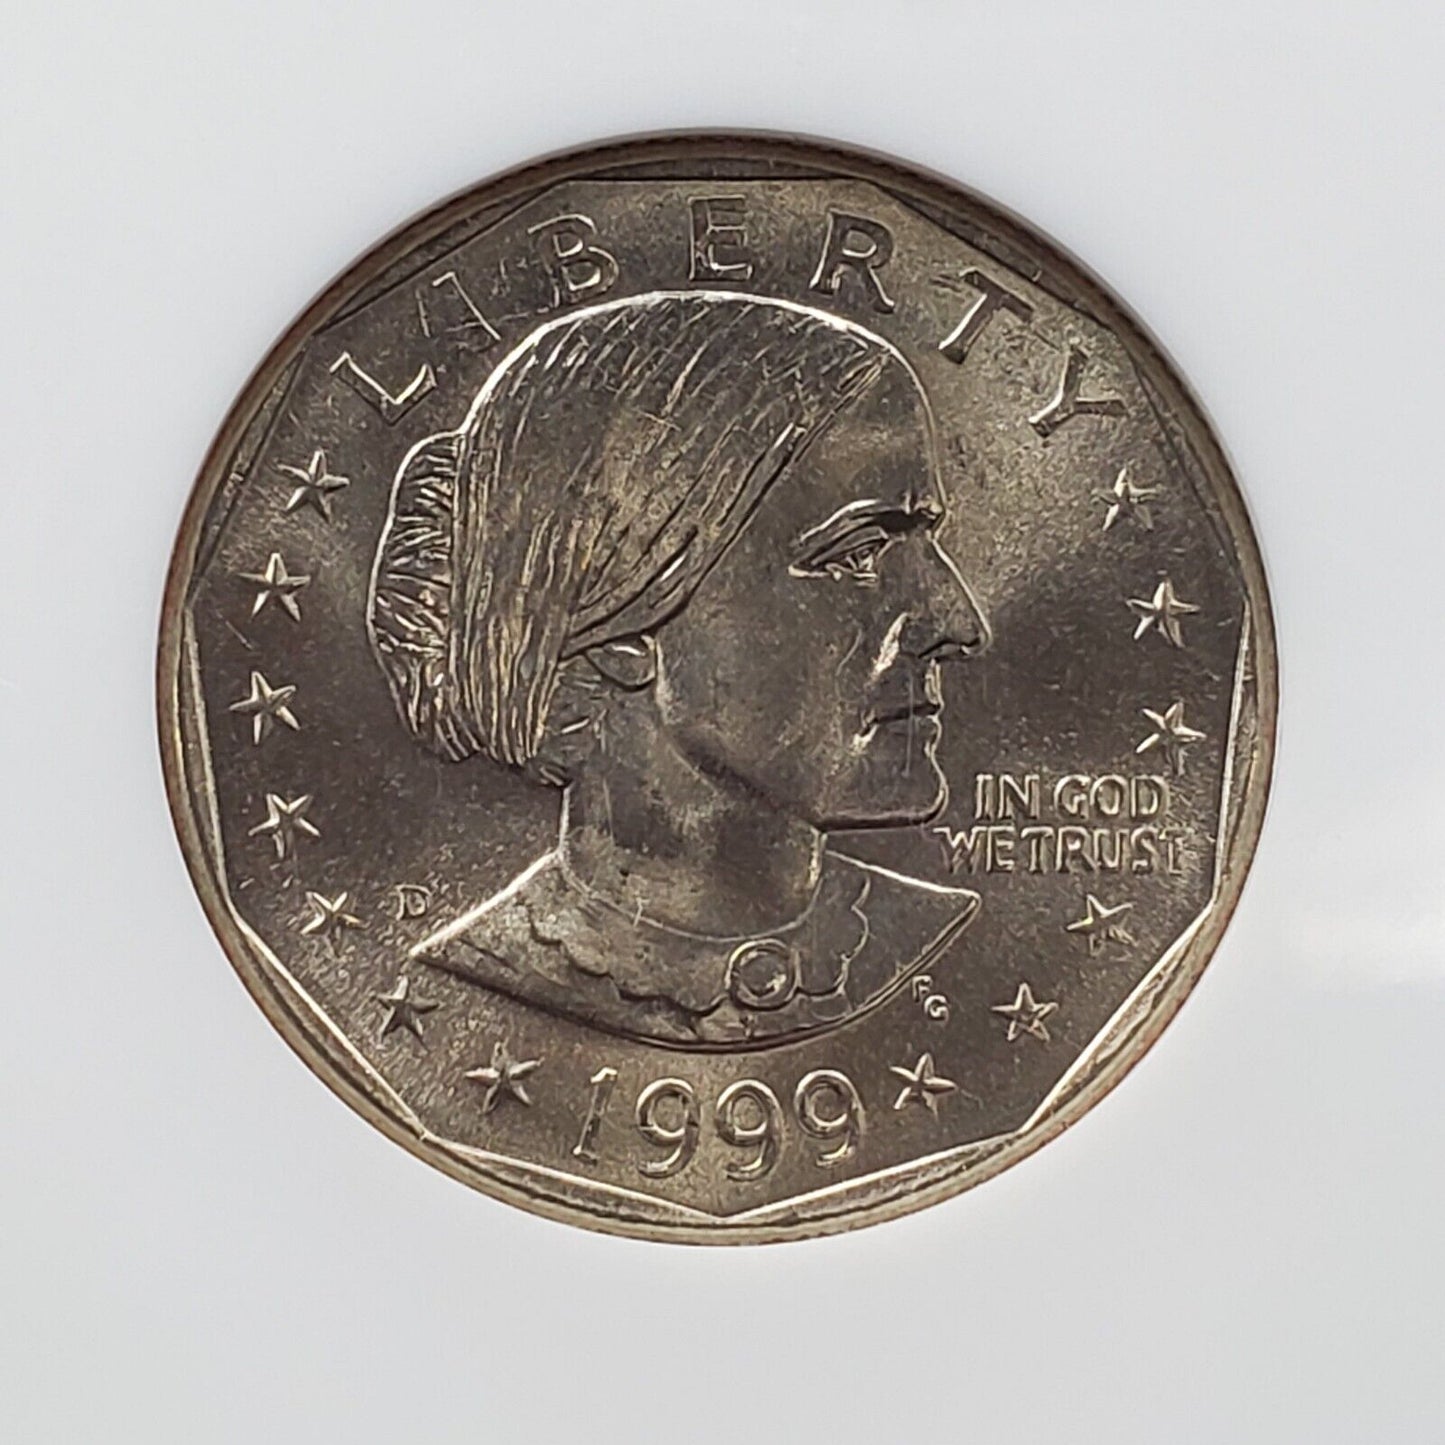 1999 D SBA $1 Susan B Anthony Small Size Dollar Coin NGC MS67 GEM BU Certified